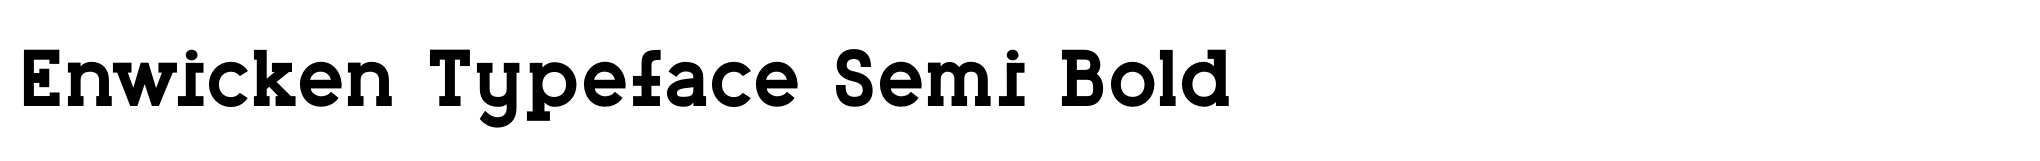 Enwicken Typeface Semi Bold image